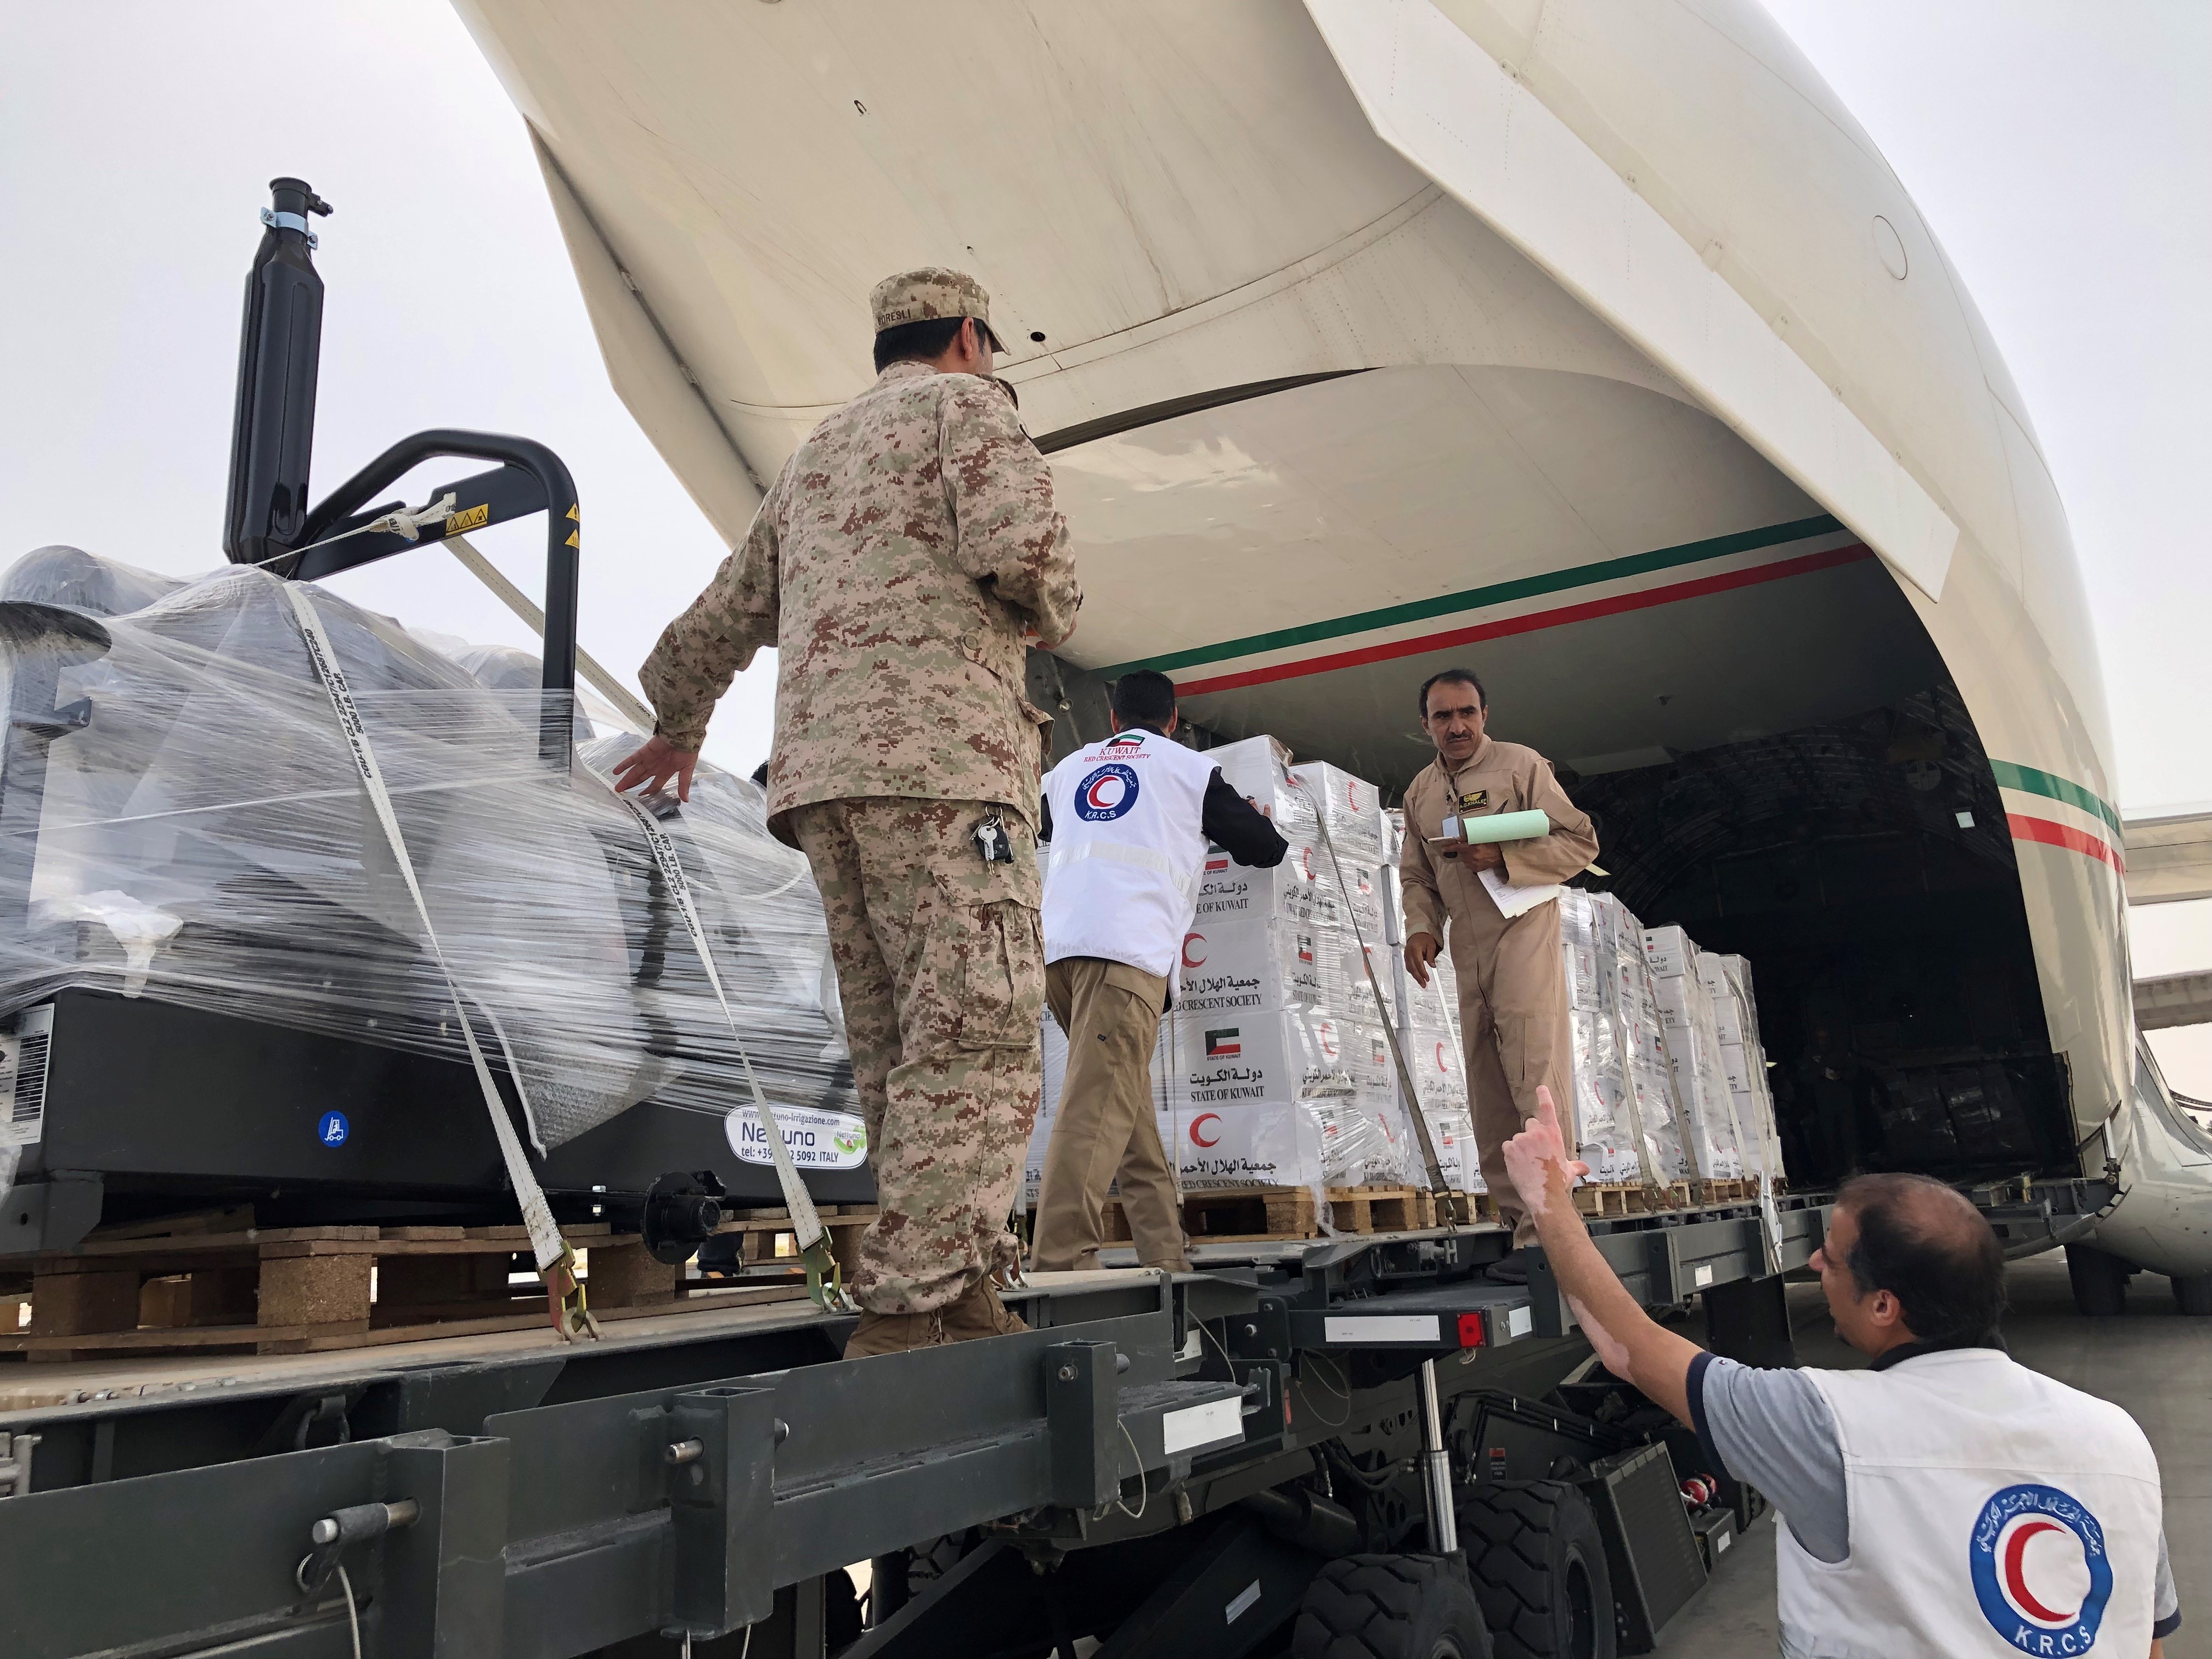 First plane boards humanitarian supplies as part of "Kuwaiti relief bridge" to help Iran
